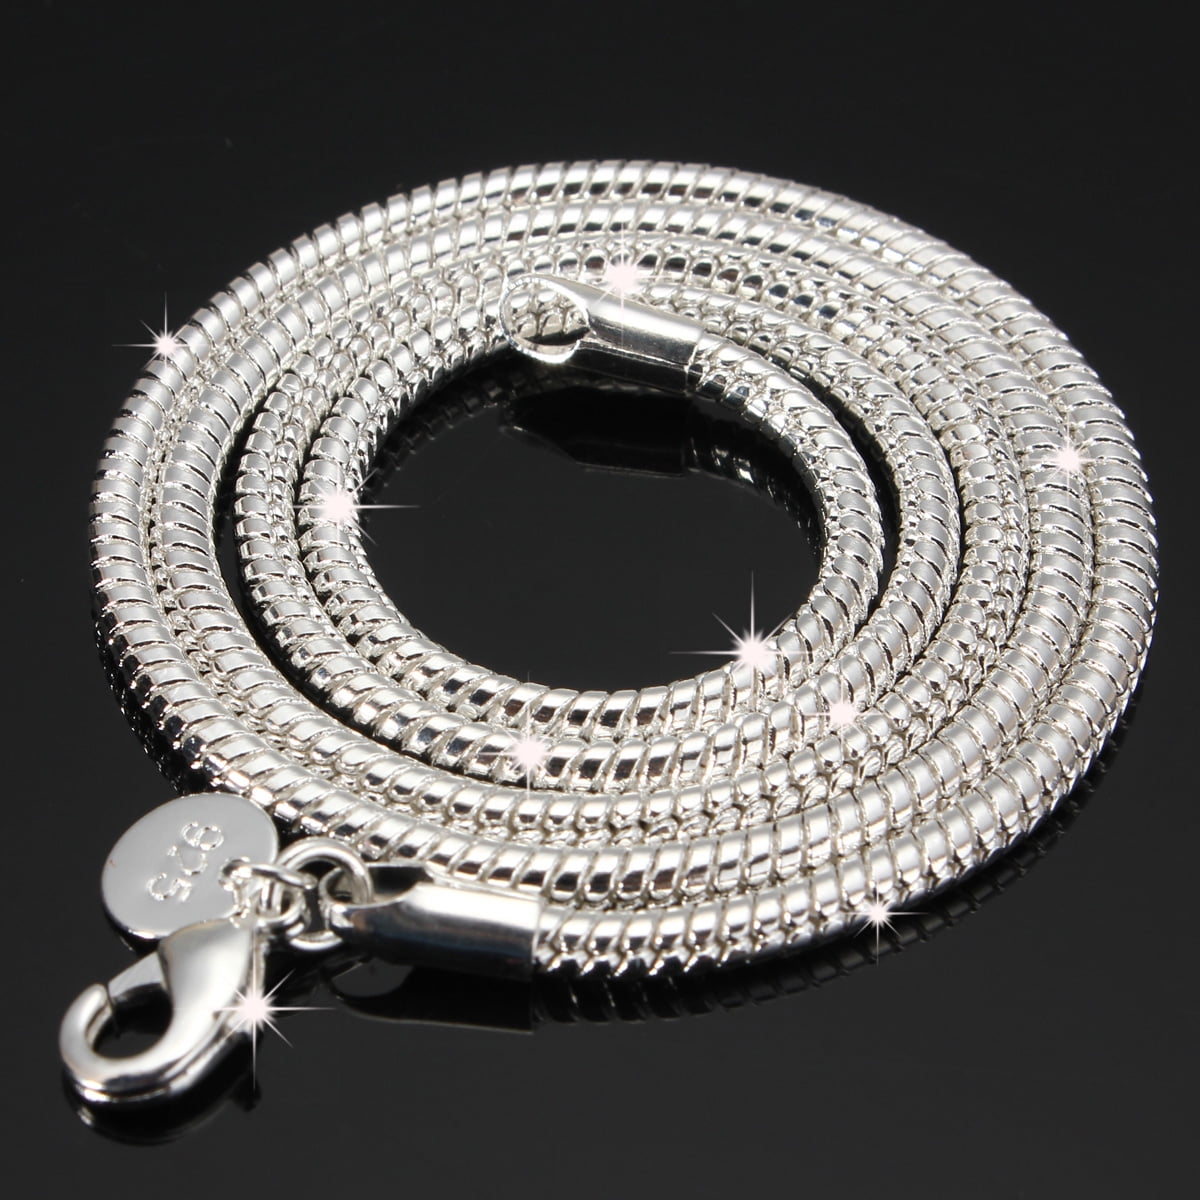 3mm 18K Gold Plated Sterling Silver 925 Italian SNAKE Chain Necklace Bracelet 